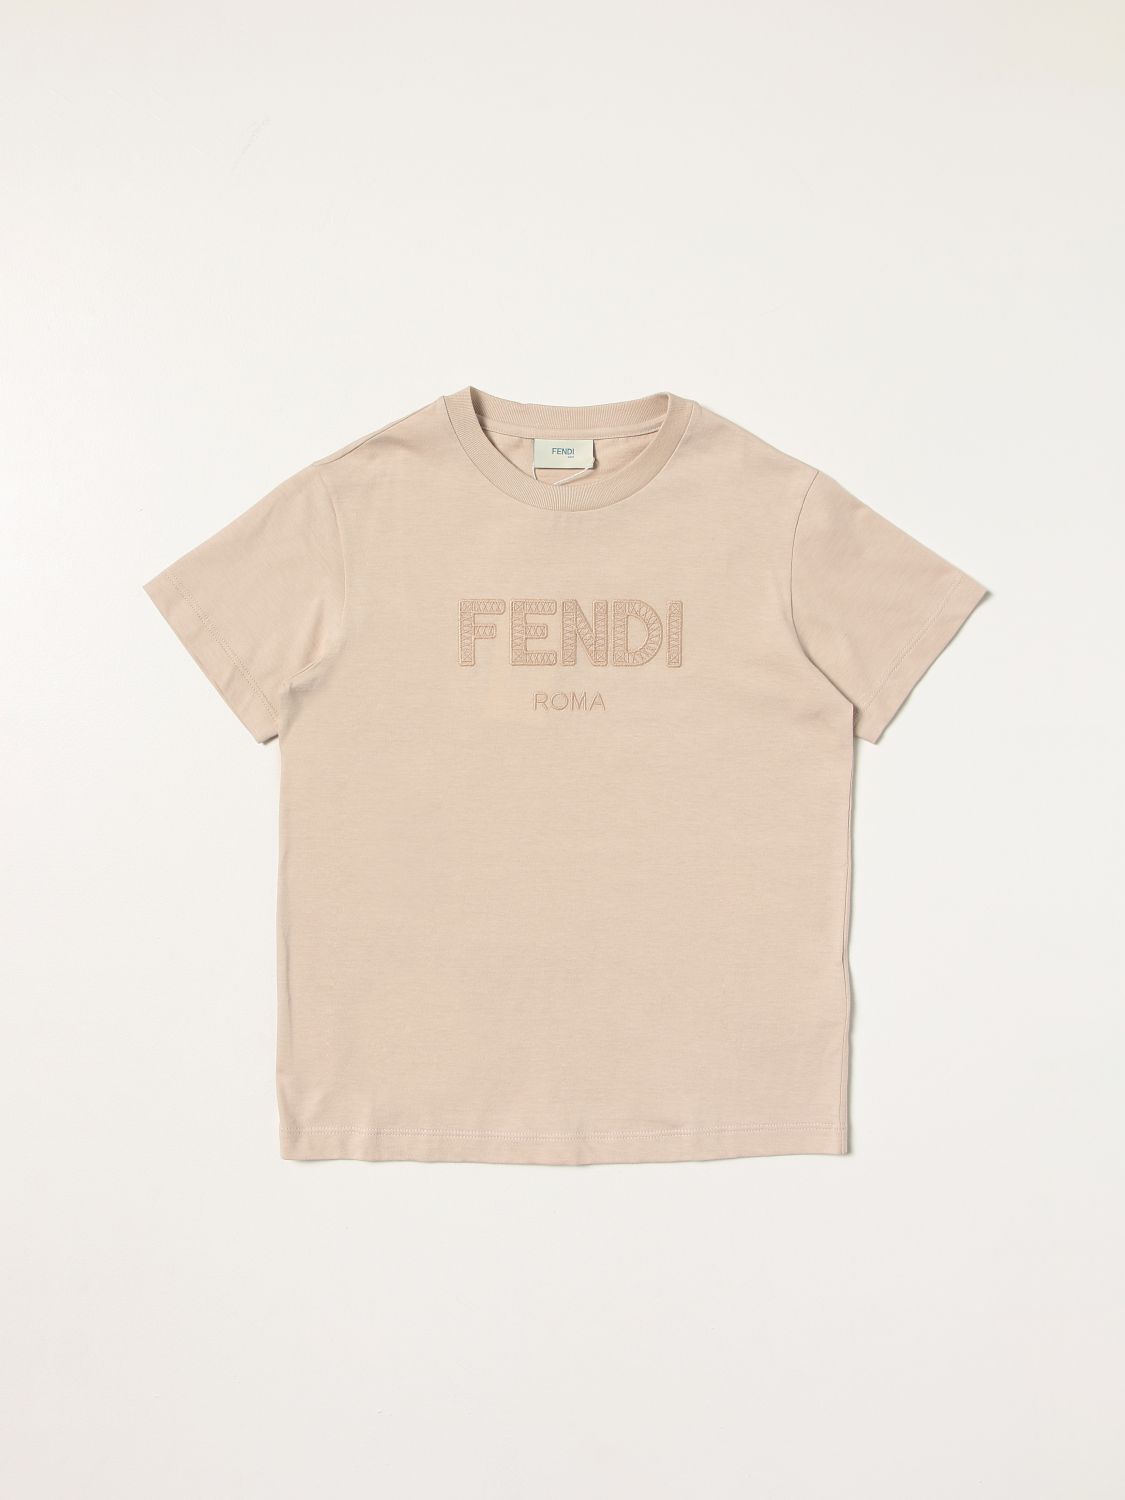 Fendi Outlet: t-shirt for girls - Cream | Fendi t-shirt JUI028 7AJ ...